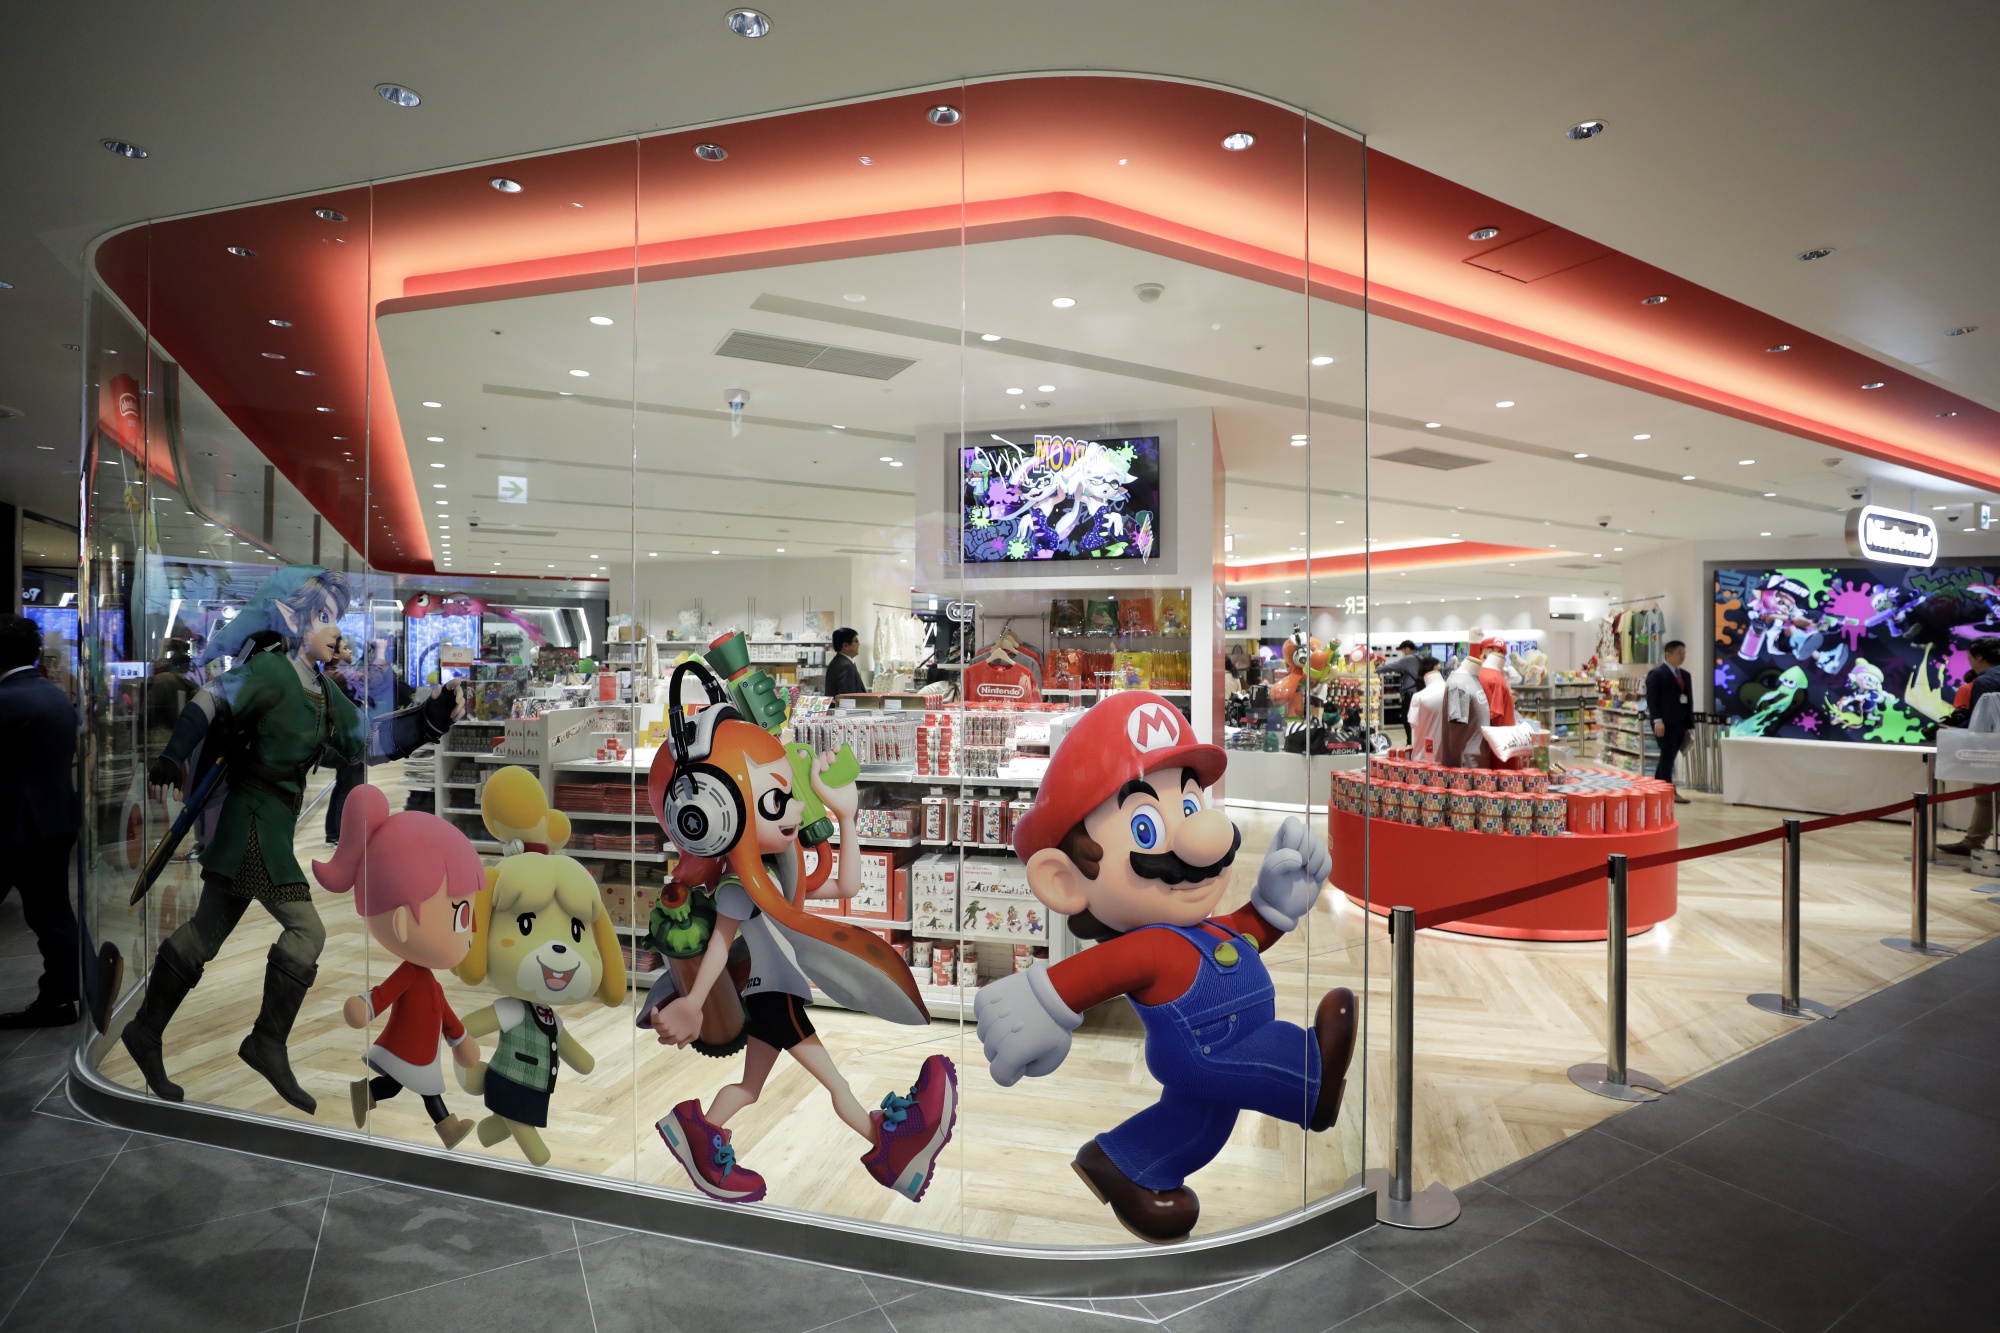 Japan's Official Nintendo Store Tour in Shibuya, Tokyo